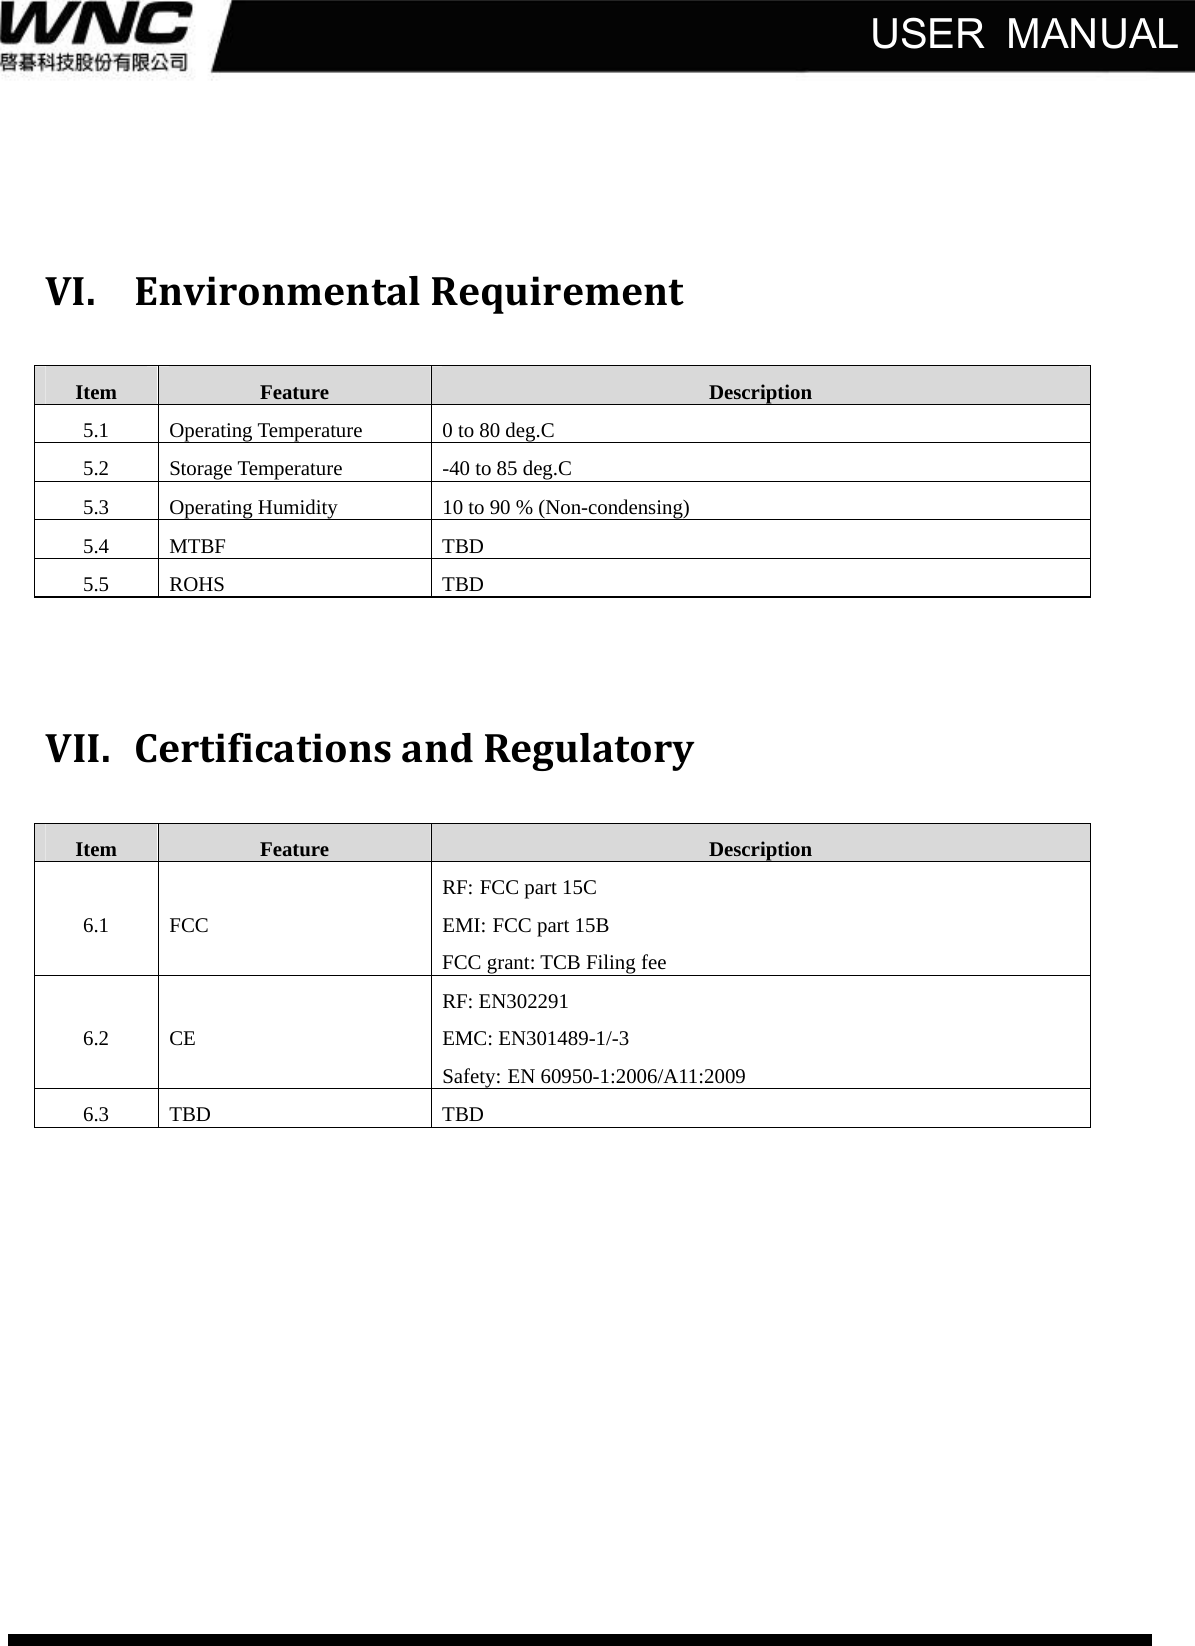   USER  MANUALVI. EnvironmentalRequirementItem  Feature  Description 5.1  Operating Temperature  0 to 80 deg.C 5.2  Storage Temperature  -40 to 85 deg.C 5.3  Operating Humidity  10 to 90 % (Non-condensing) 5.4 MTBF  TBD 5.5 ROHS  TBD VII. CertificationsandRegulatoryItem  Feature  Description 6.1 FCC RF: FCC part 15C EMI: FCC part 15B FCC grant: TCB Filing fee 6.2 CE RF: EN302291 EMC: EN301489-1/-3 Safety: EN 60950-1:2006/A11:2009 6.3 TBD  TBD             